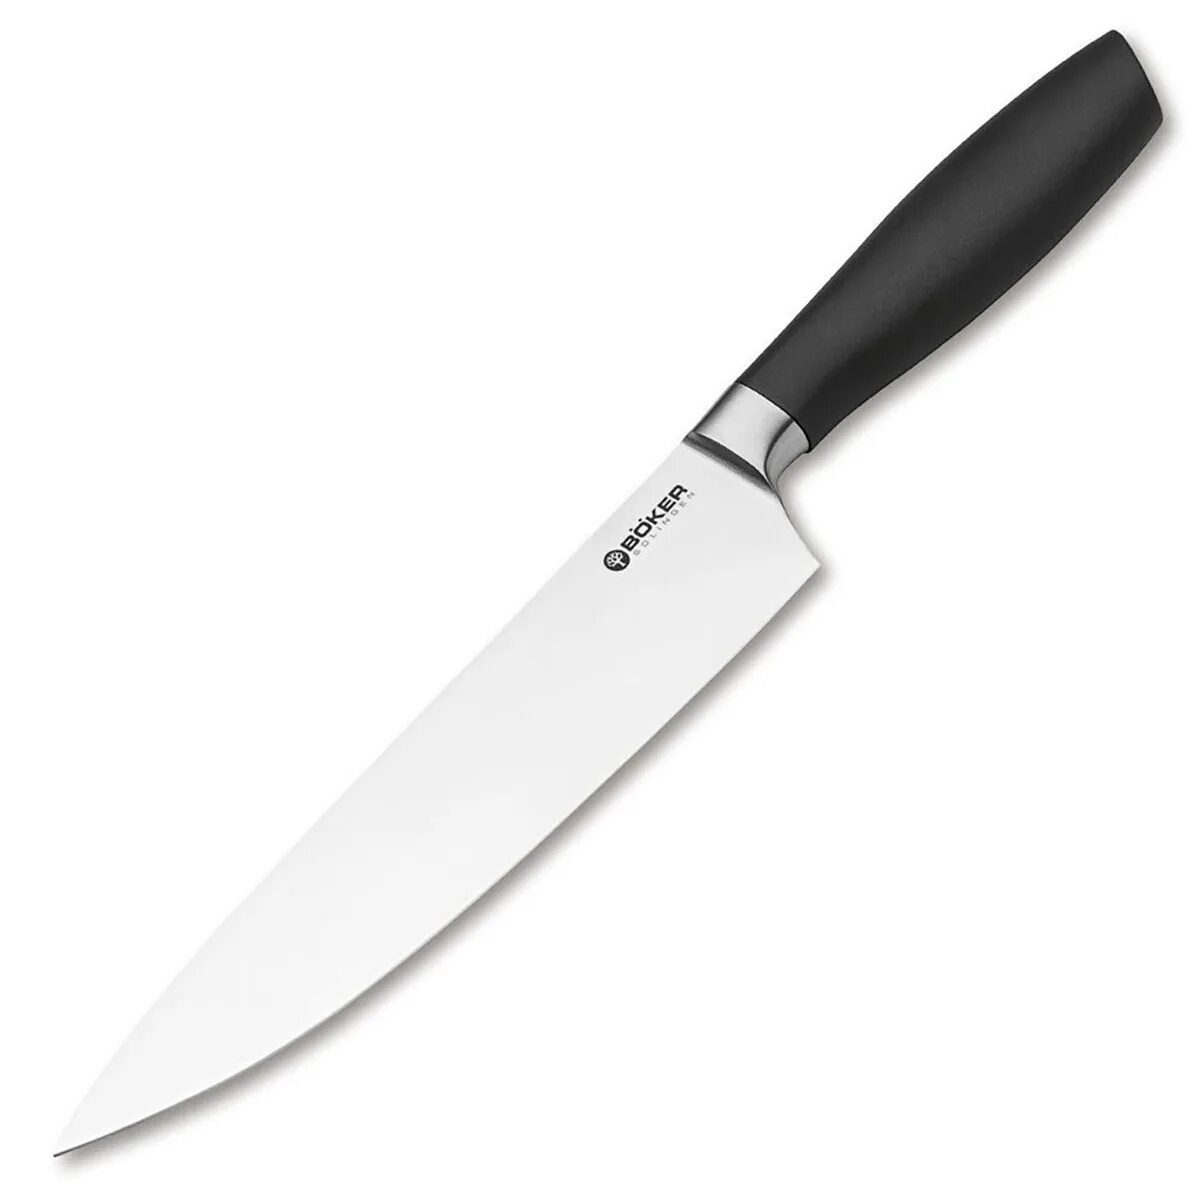 Ножь. Нож кухонный “Chang Feng” fk7105 5″. Нож без фона. Кухонный нож на прозрачном фоне. Нож без фона для фотошопа.